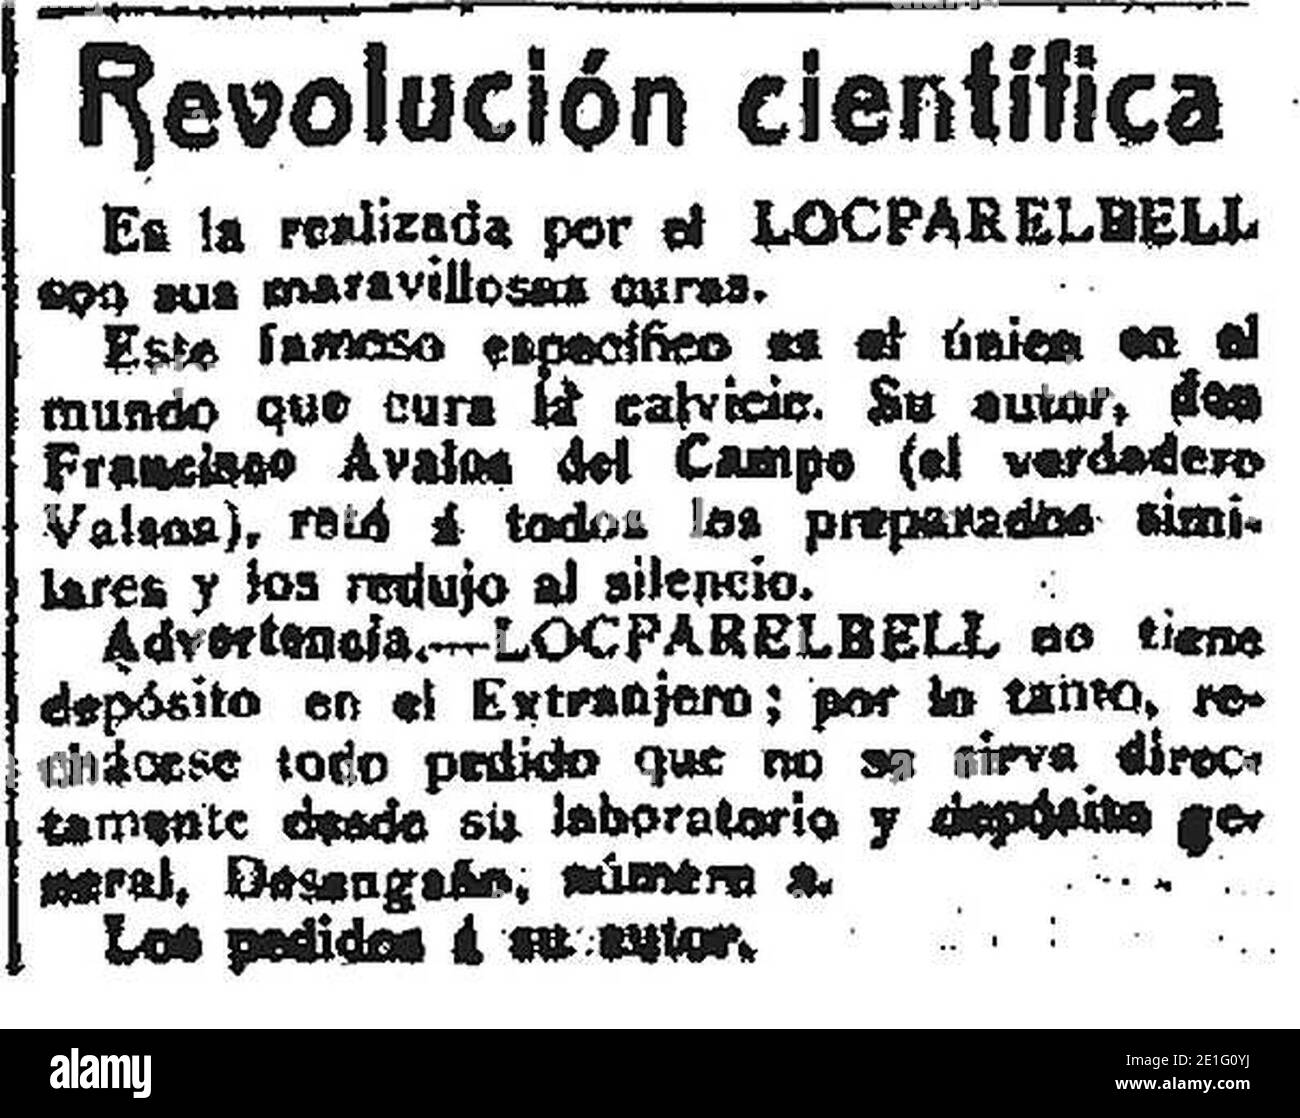 Locparelbell-1911-03-22-revolucion-cientifica. Stock Photo